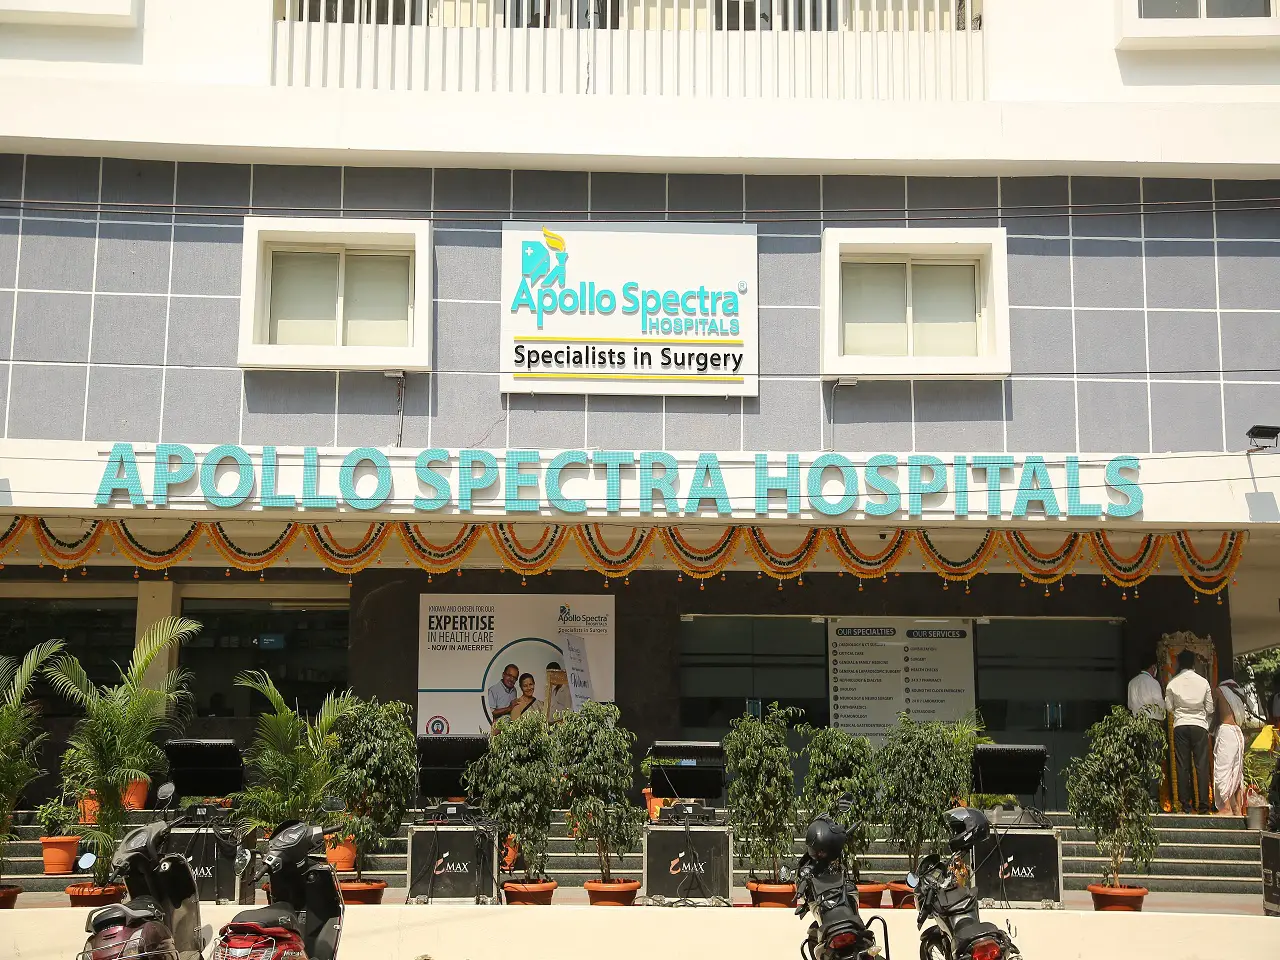 Apollo Spectra Hospital